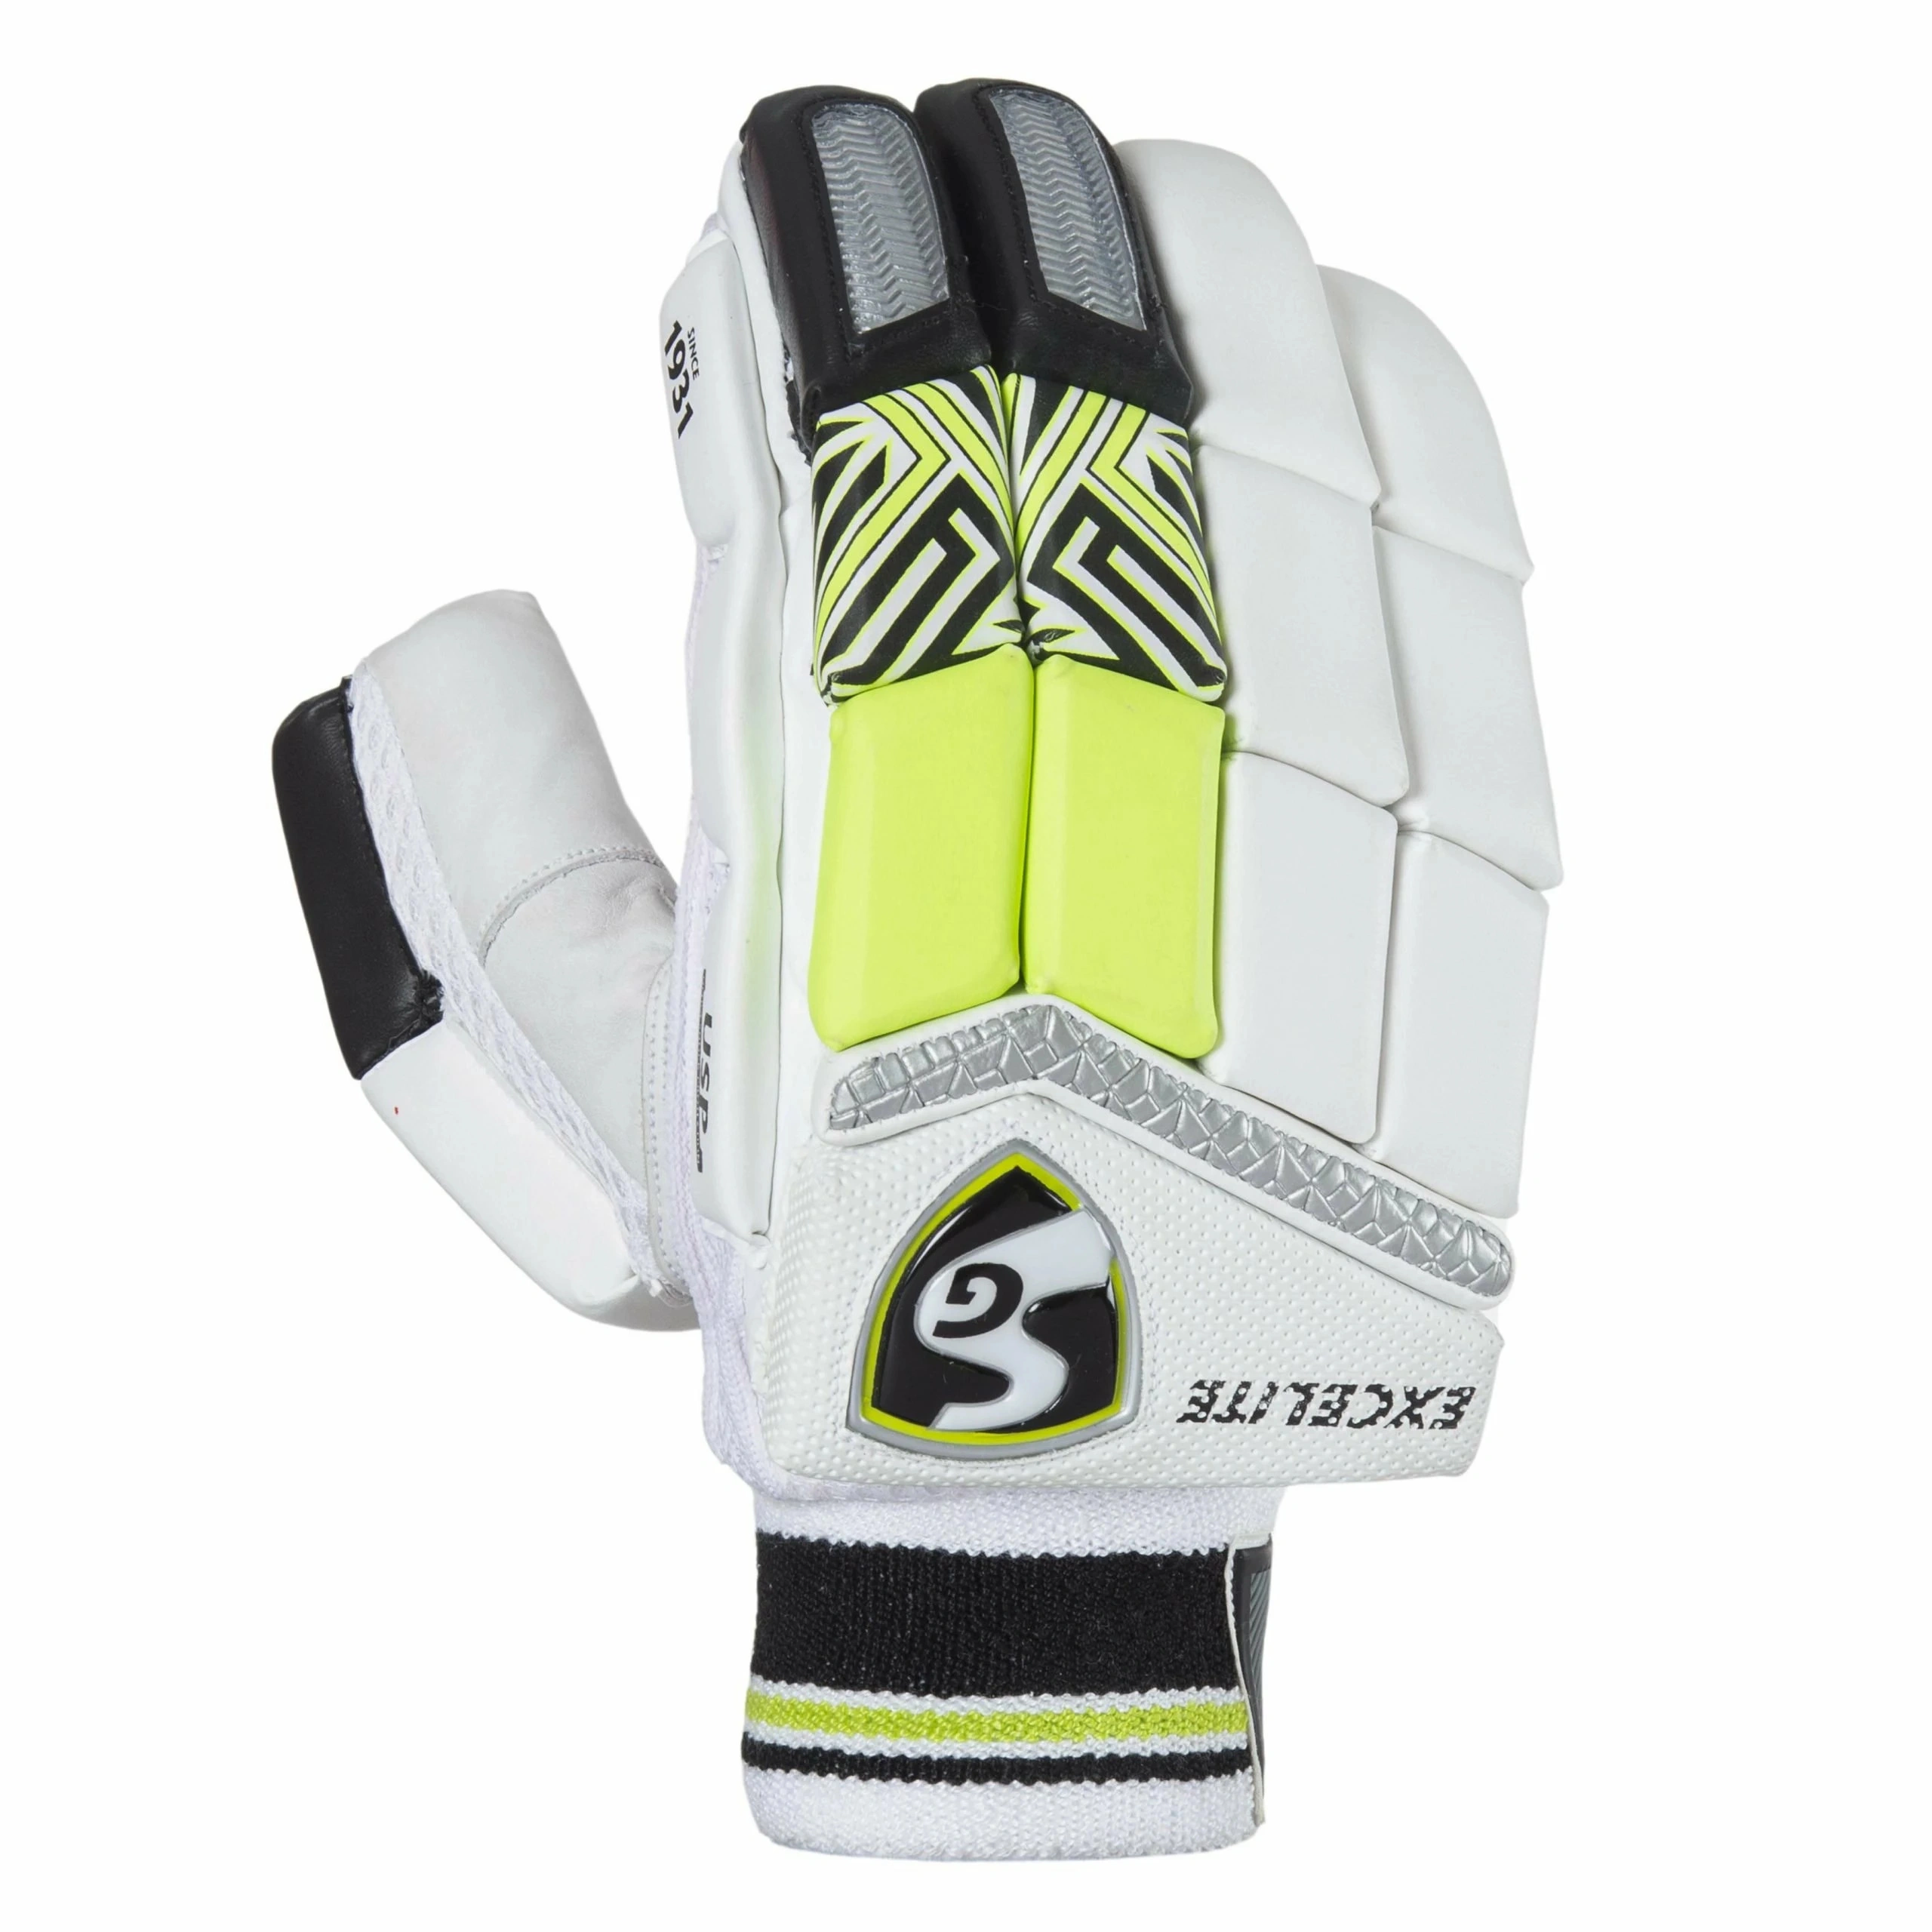 SG Excelite Batting Gloves High Quality Leather Palm-MENS-1 pair-1